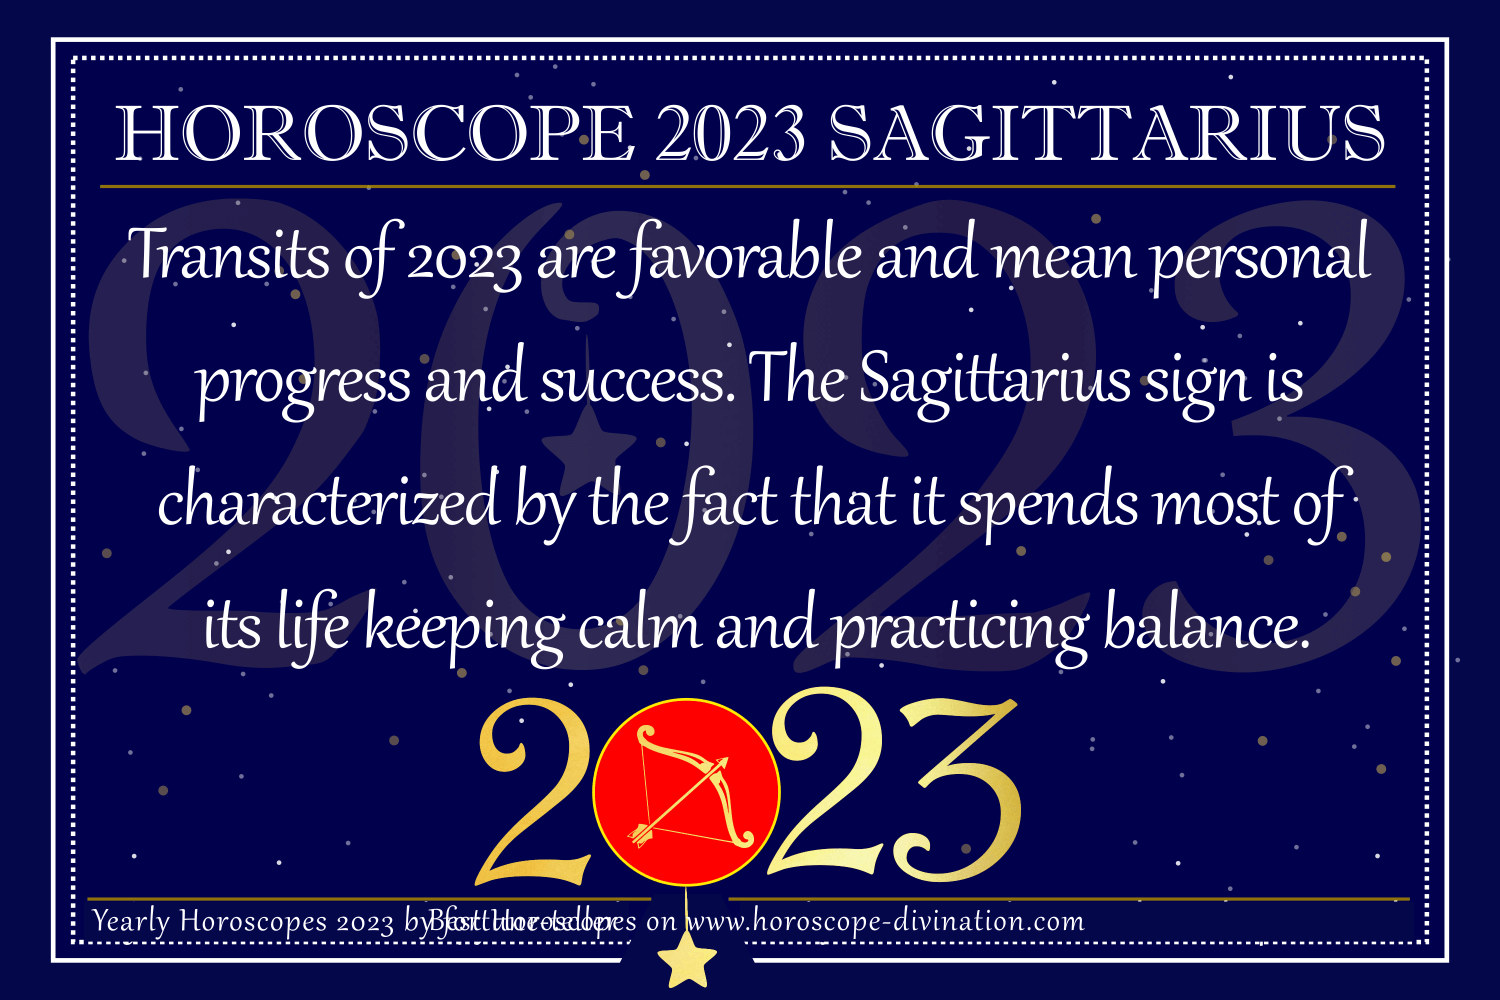 Horoscope2023sagittarius 